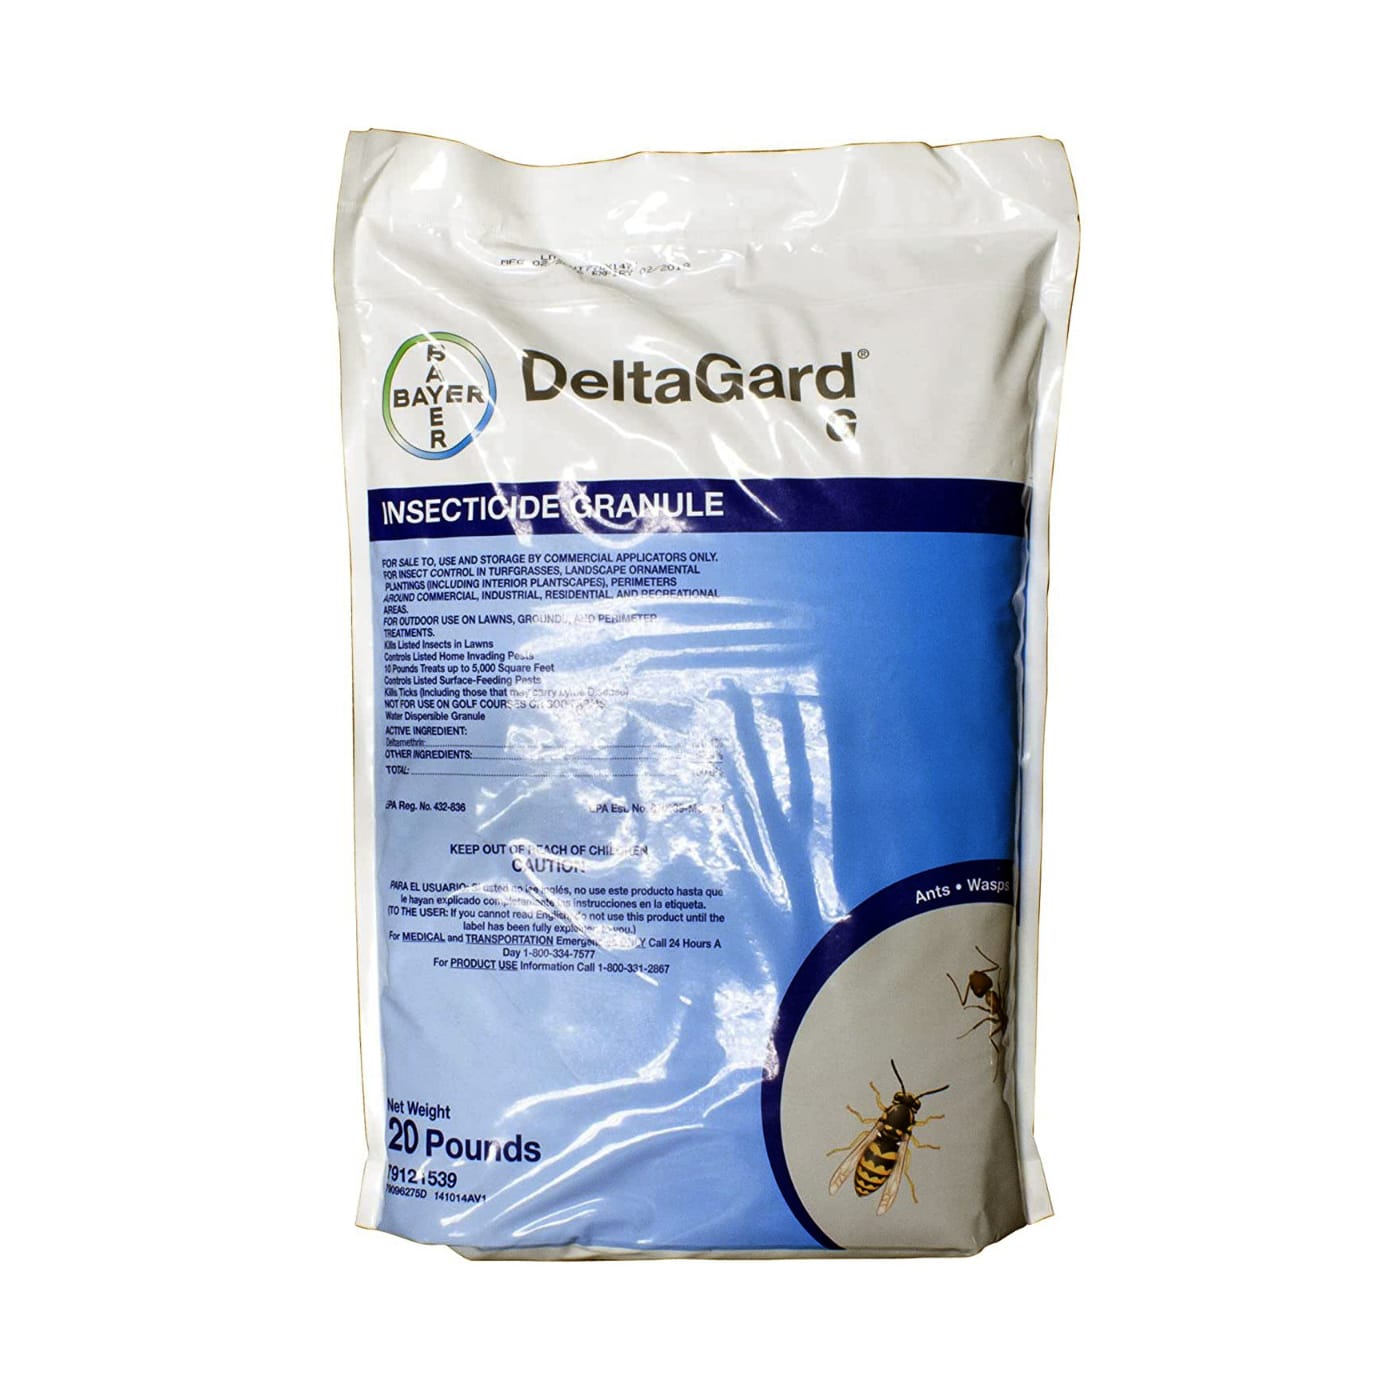 DeltaGard G Granular Insecticide